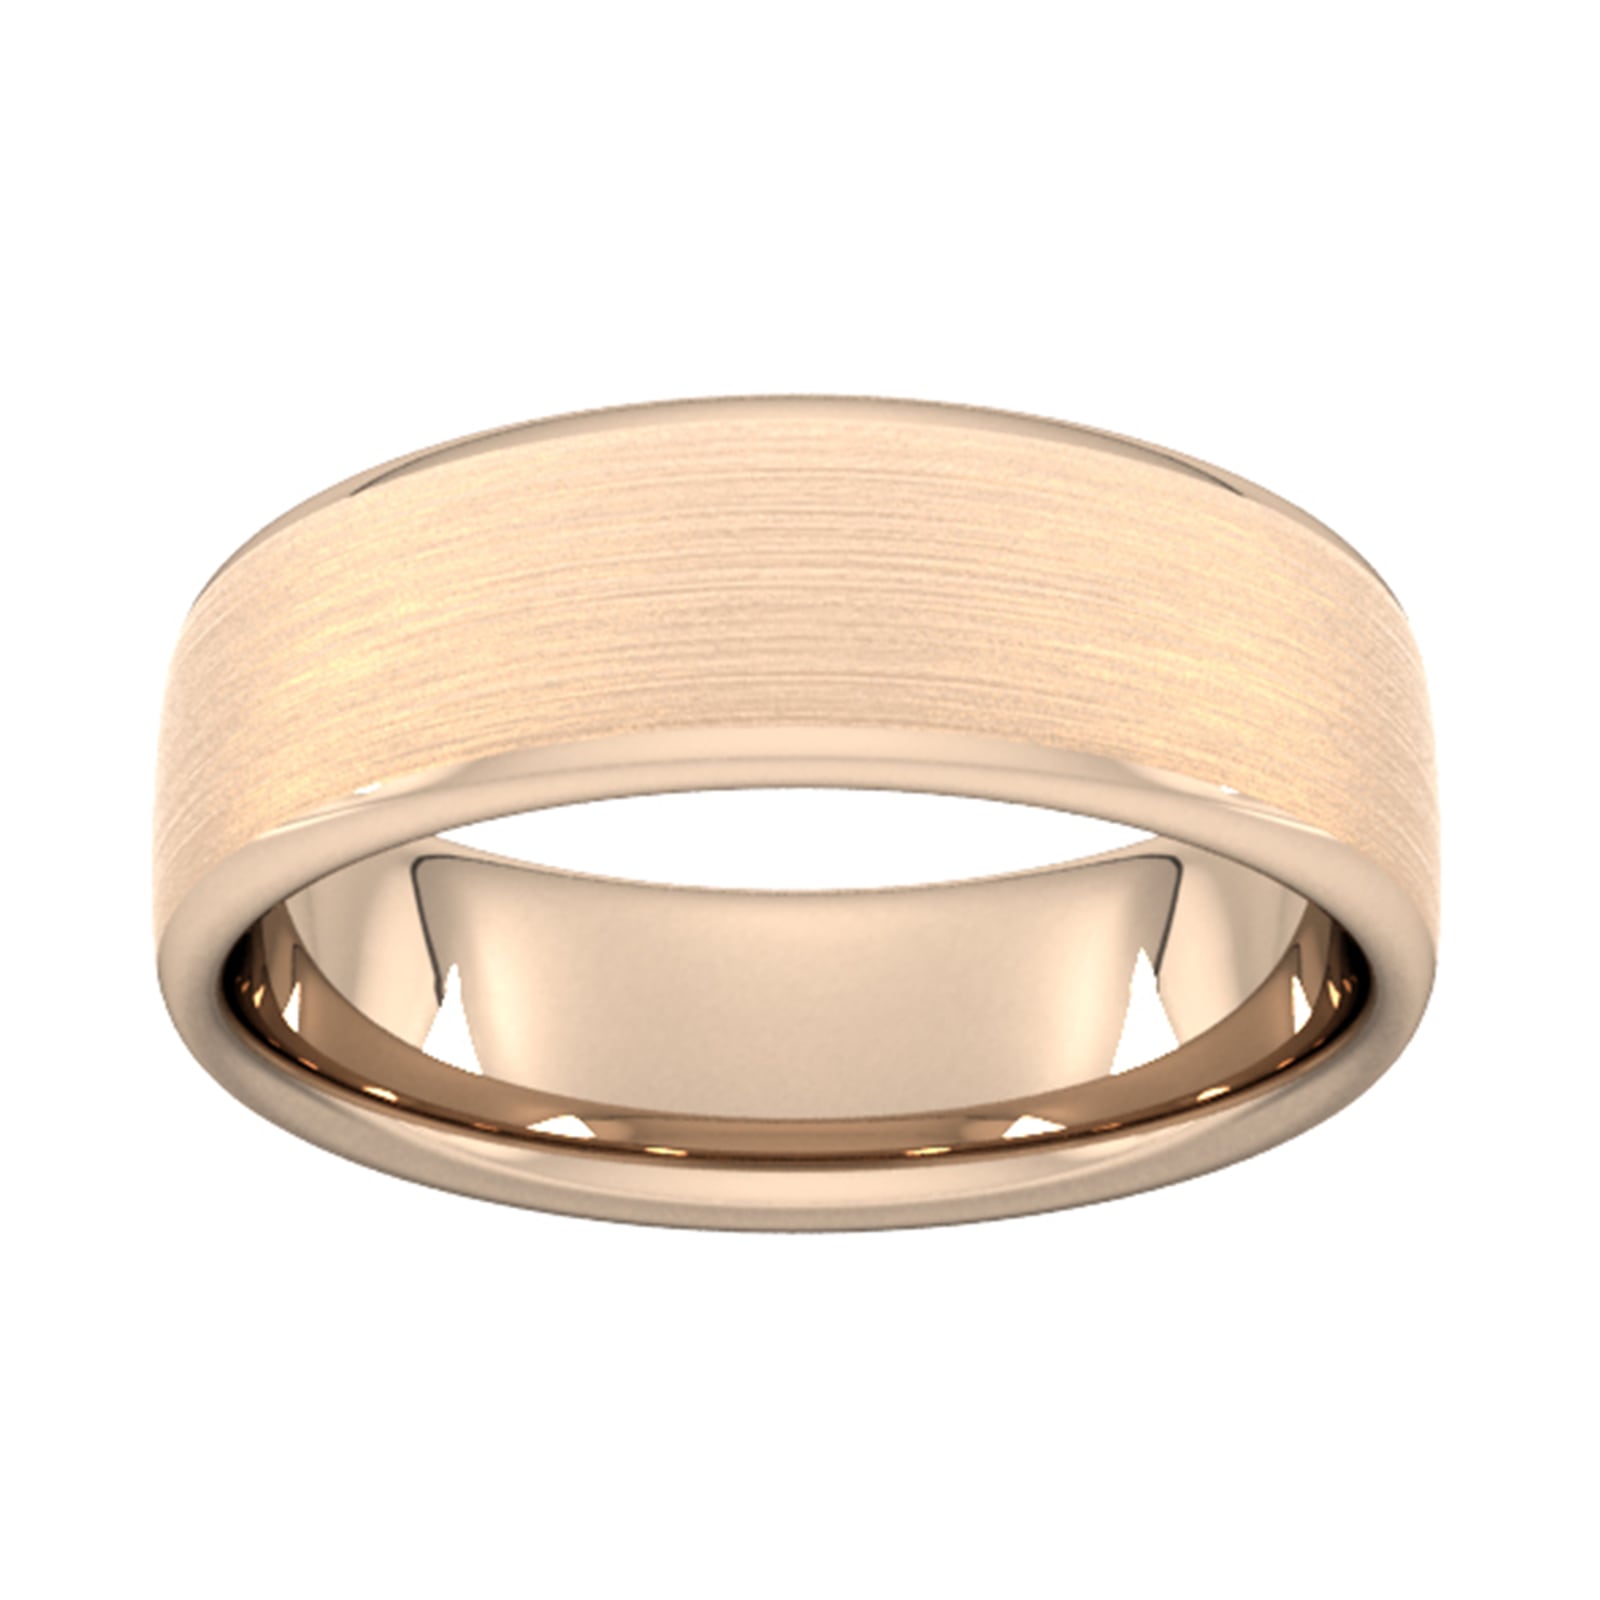 7mm Slight Court Standard Matt Finished Wedding Ring In 9 Carat Rose Gold - Ring Size M